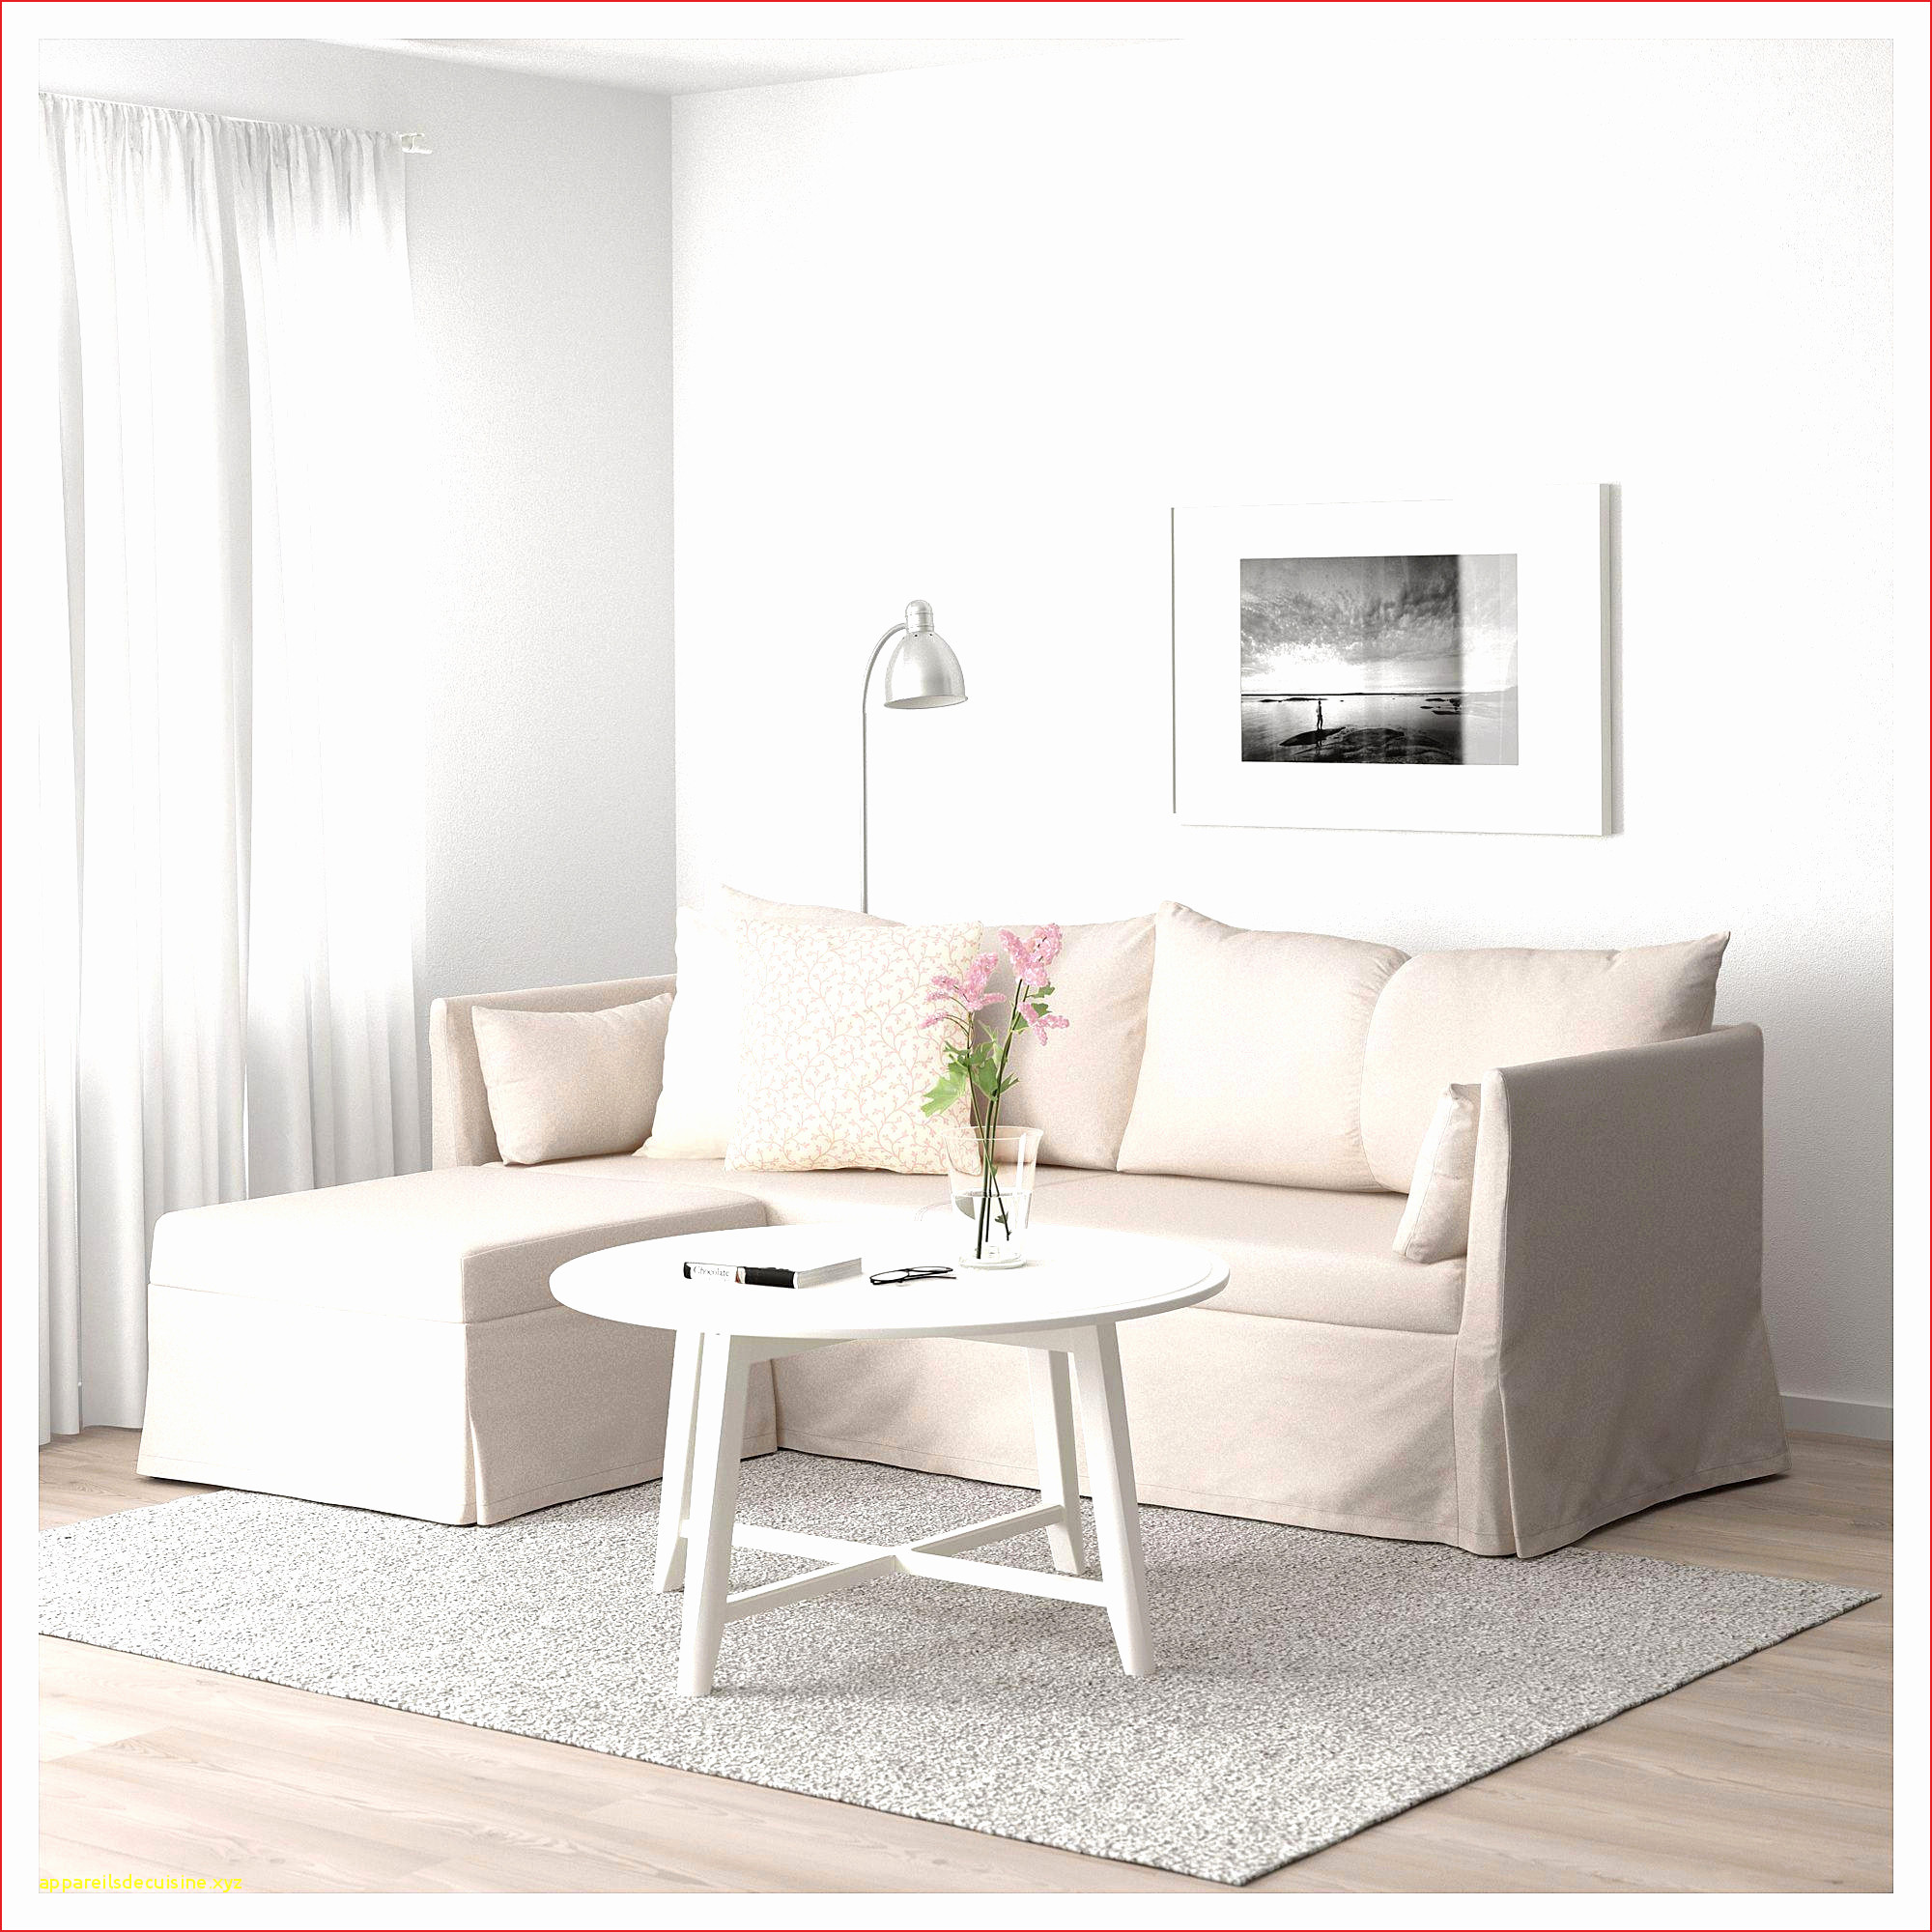 armoire blanche chambre meuble blanc chambre armoires en bois pour chambre luxury of armoire blanche chambre